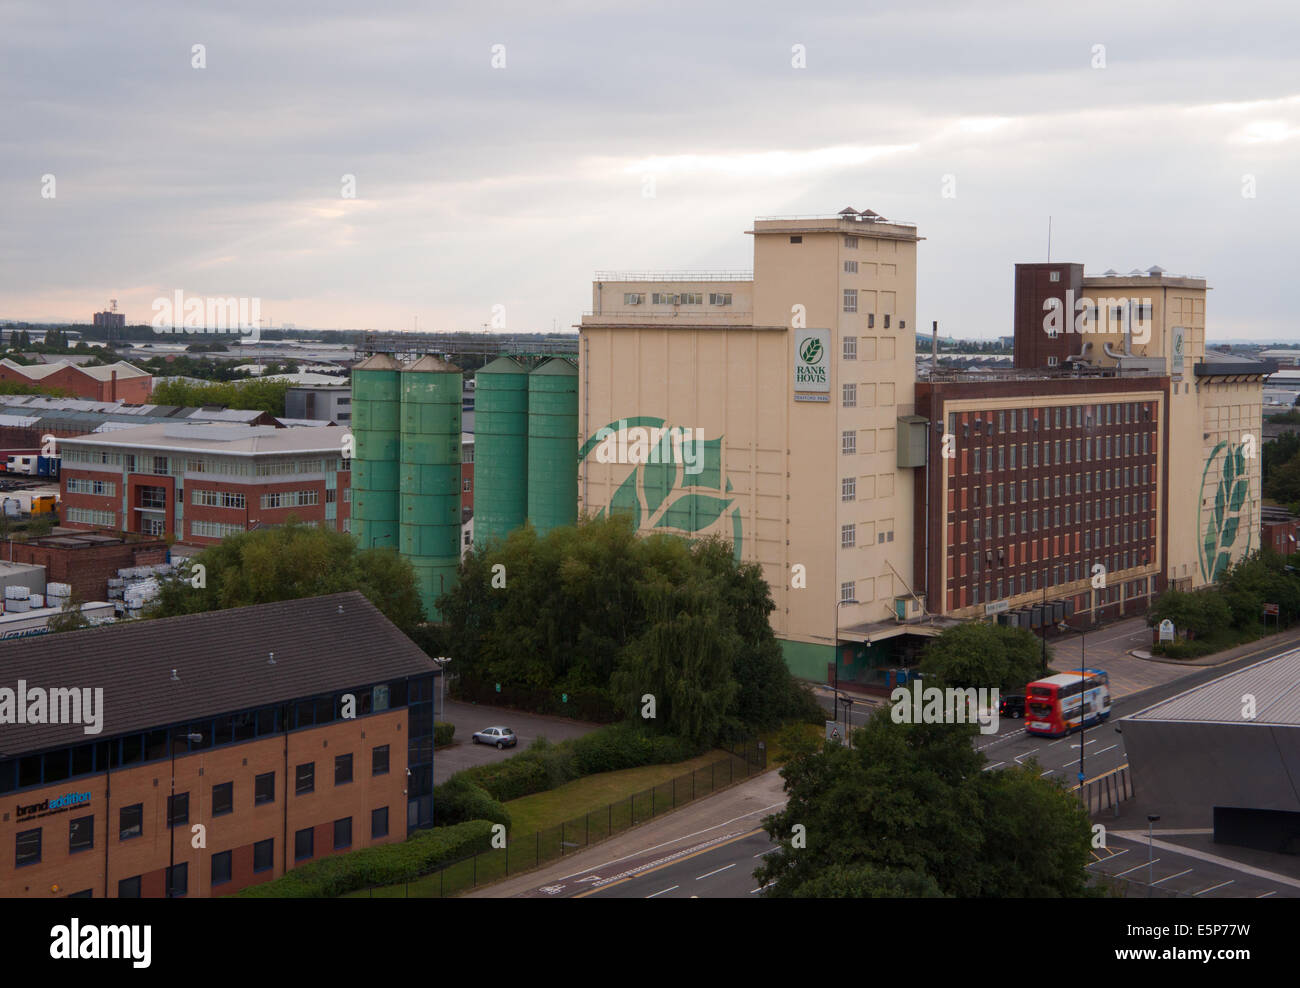 Rank Hovis edificio en Trafford Park, Manchester, Salford Quays. Foto de stock